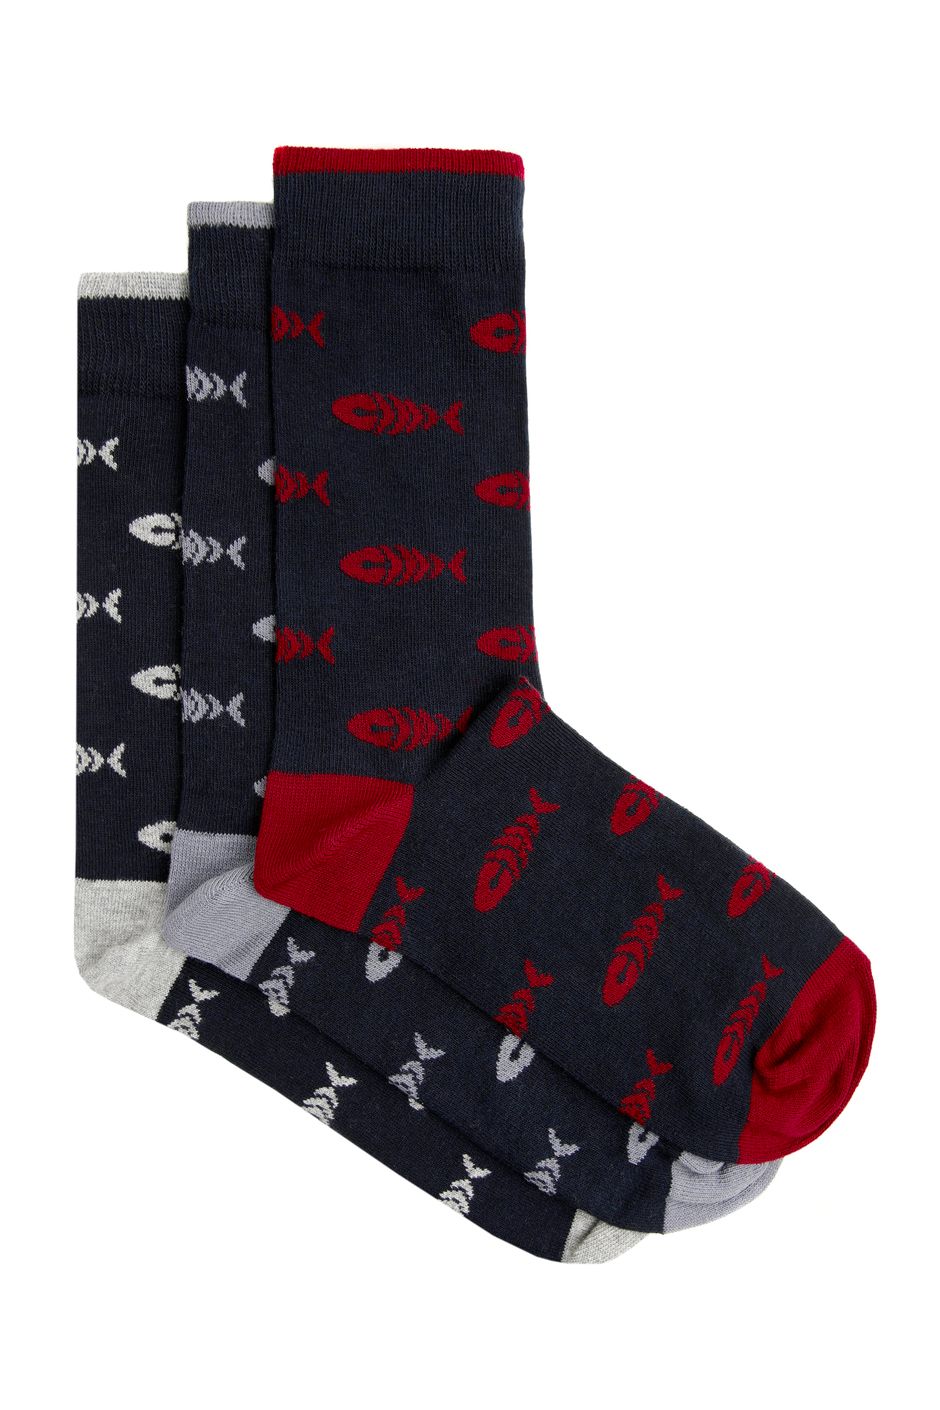 Ronan Organic Branded Socks 3 Pack Navy